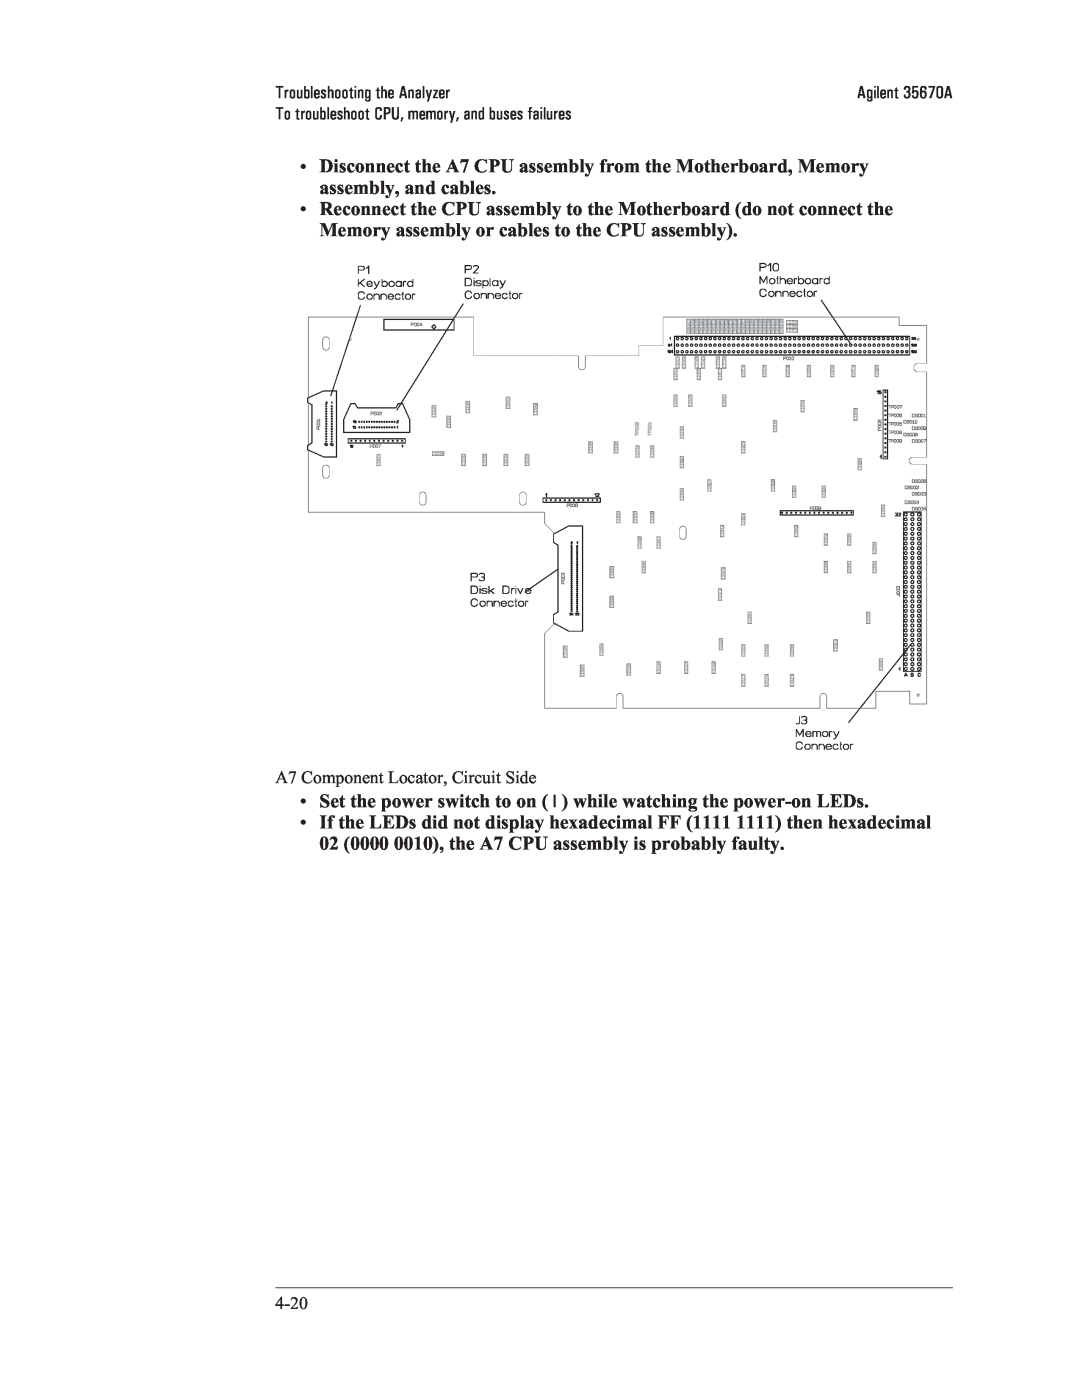 Agilent Technologies 35670-90066 manual A7 Component Locator, Circuit Side, 4-20 